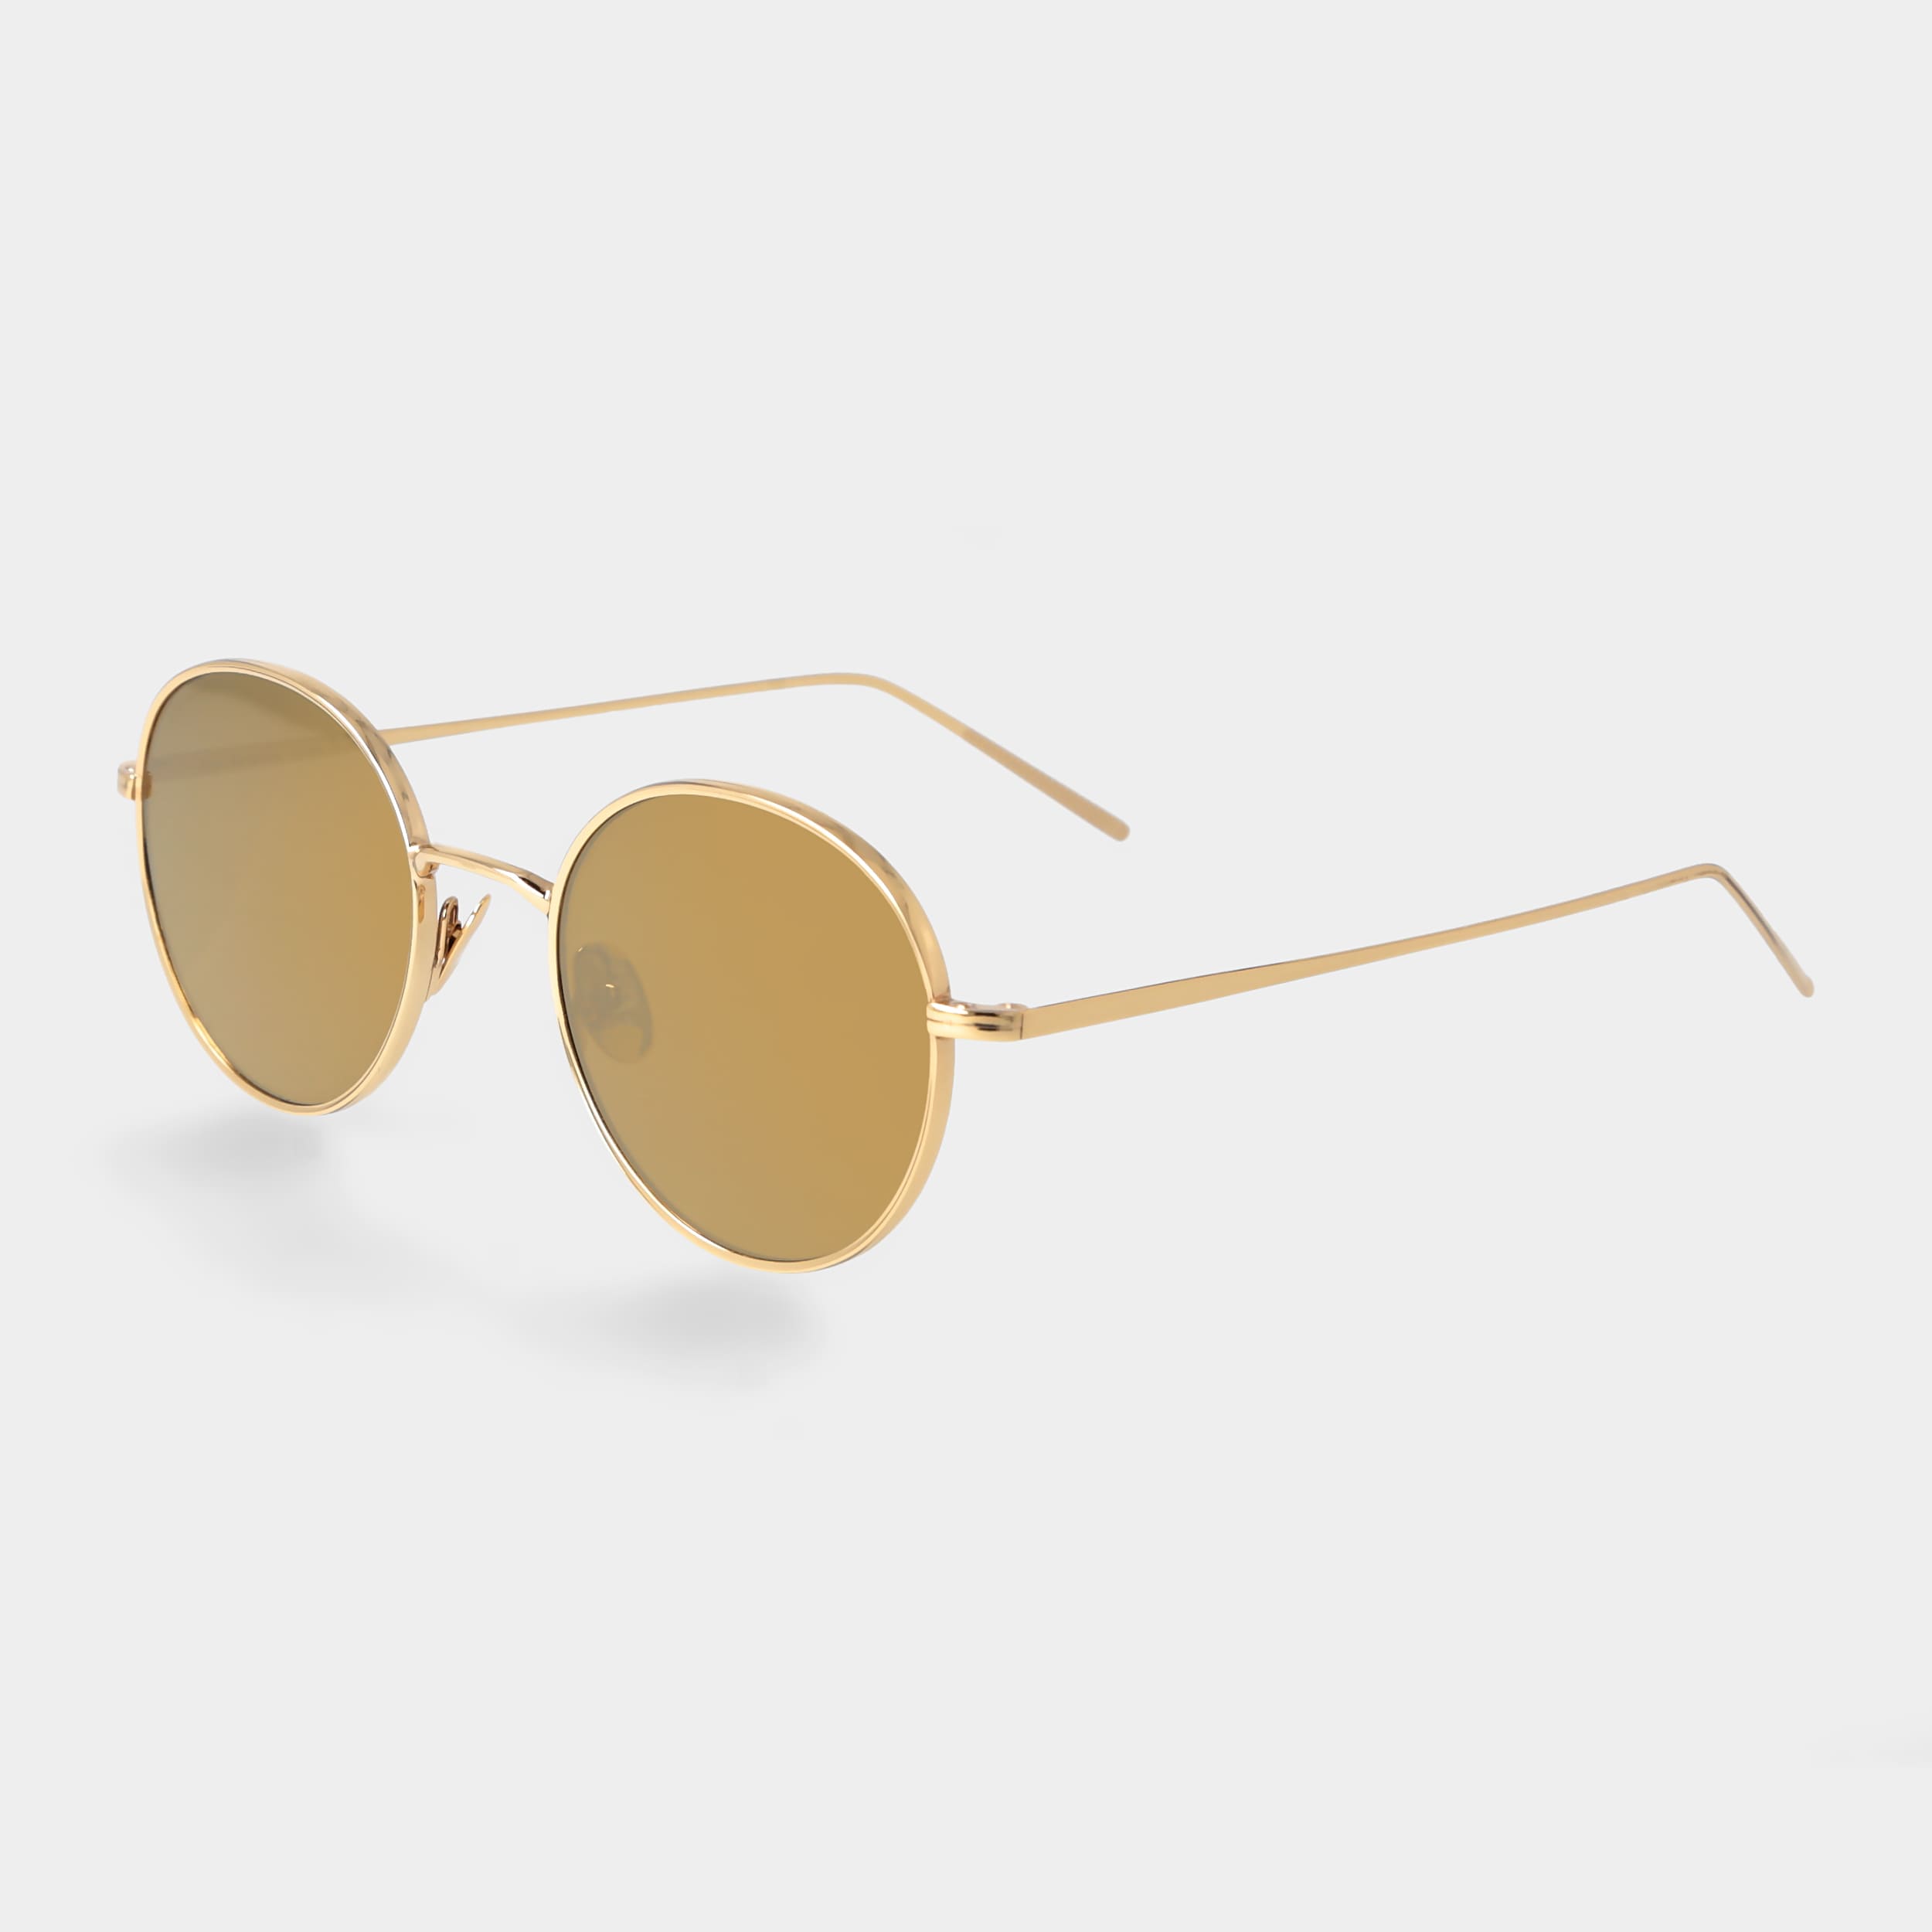 sunglasses-ulster-k-gold-tobacco-tbd-eyewear-total